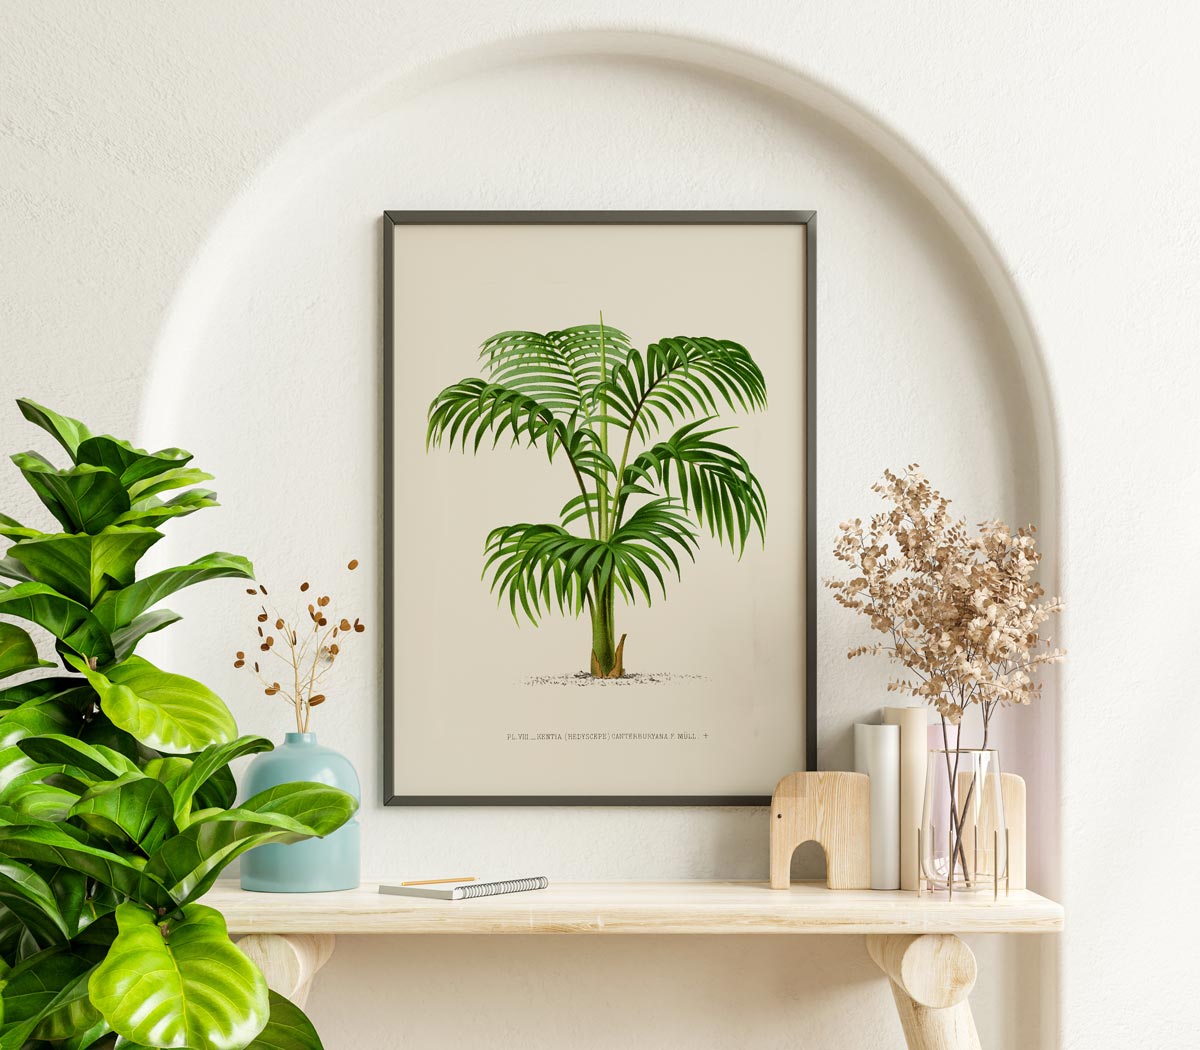 Kentia Caterburyana Palm Tree Art Print by Pieter Joseph de Pannemaeker